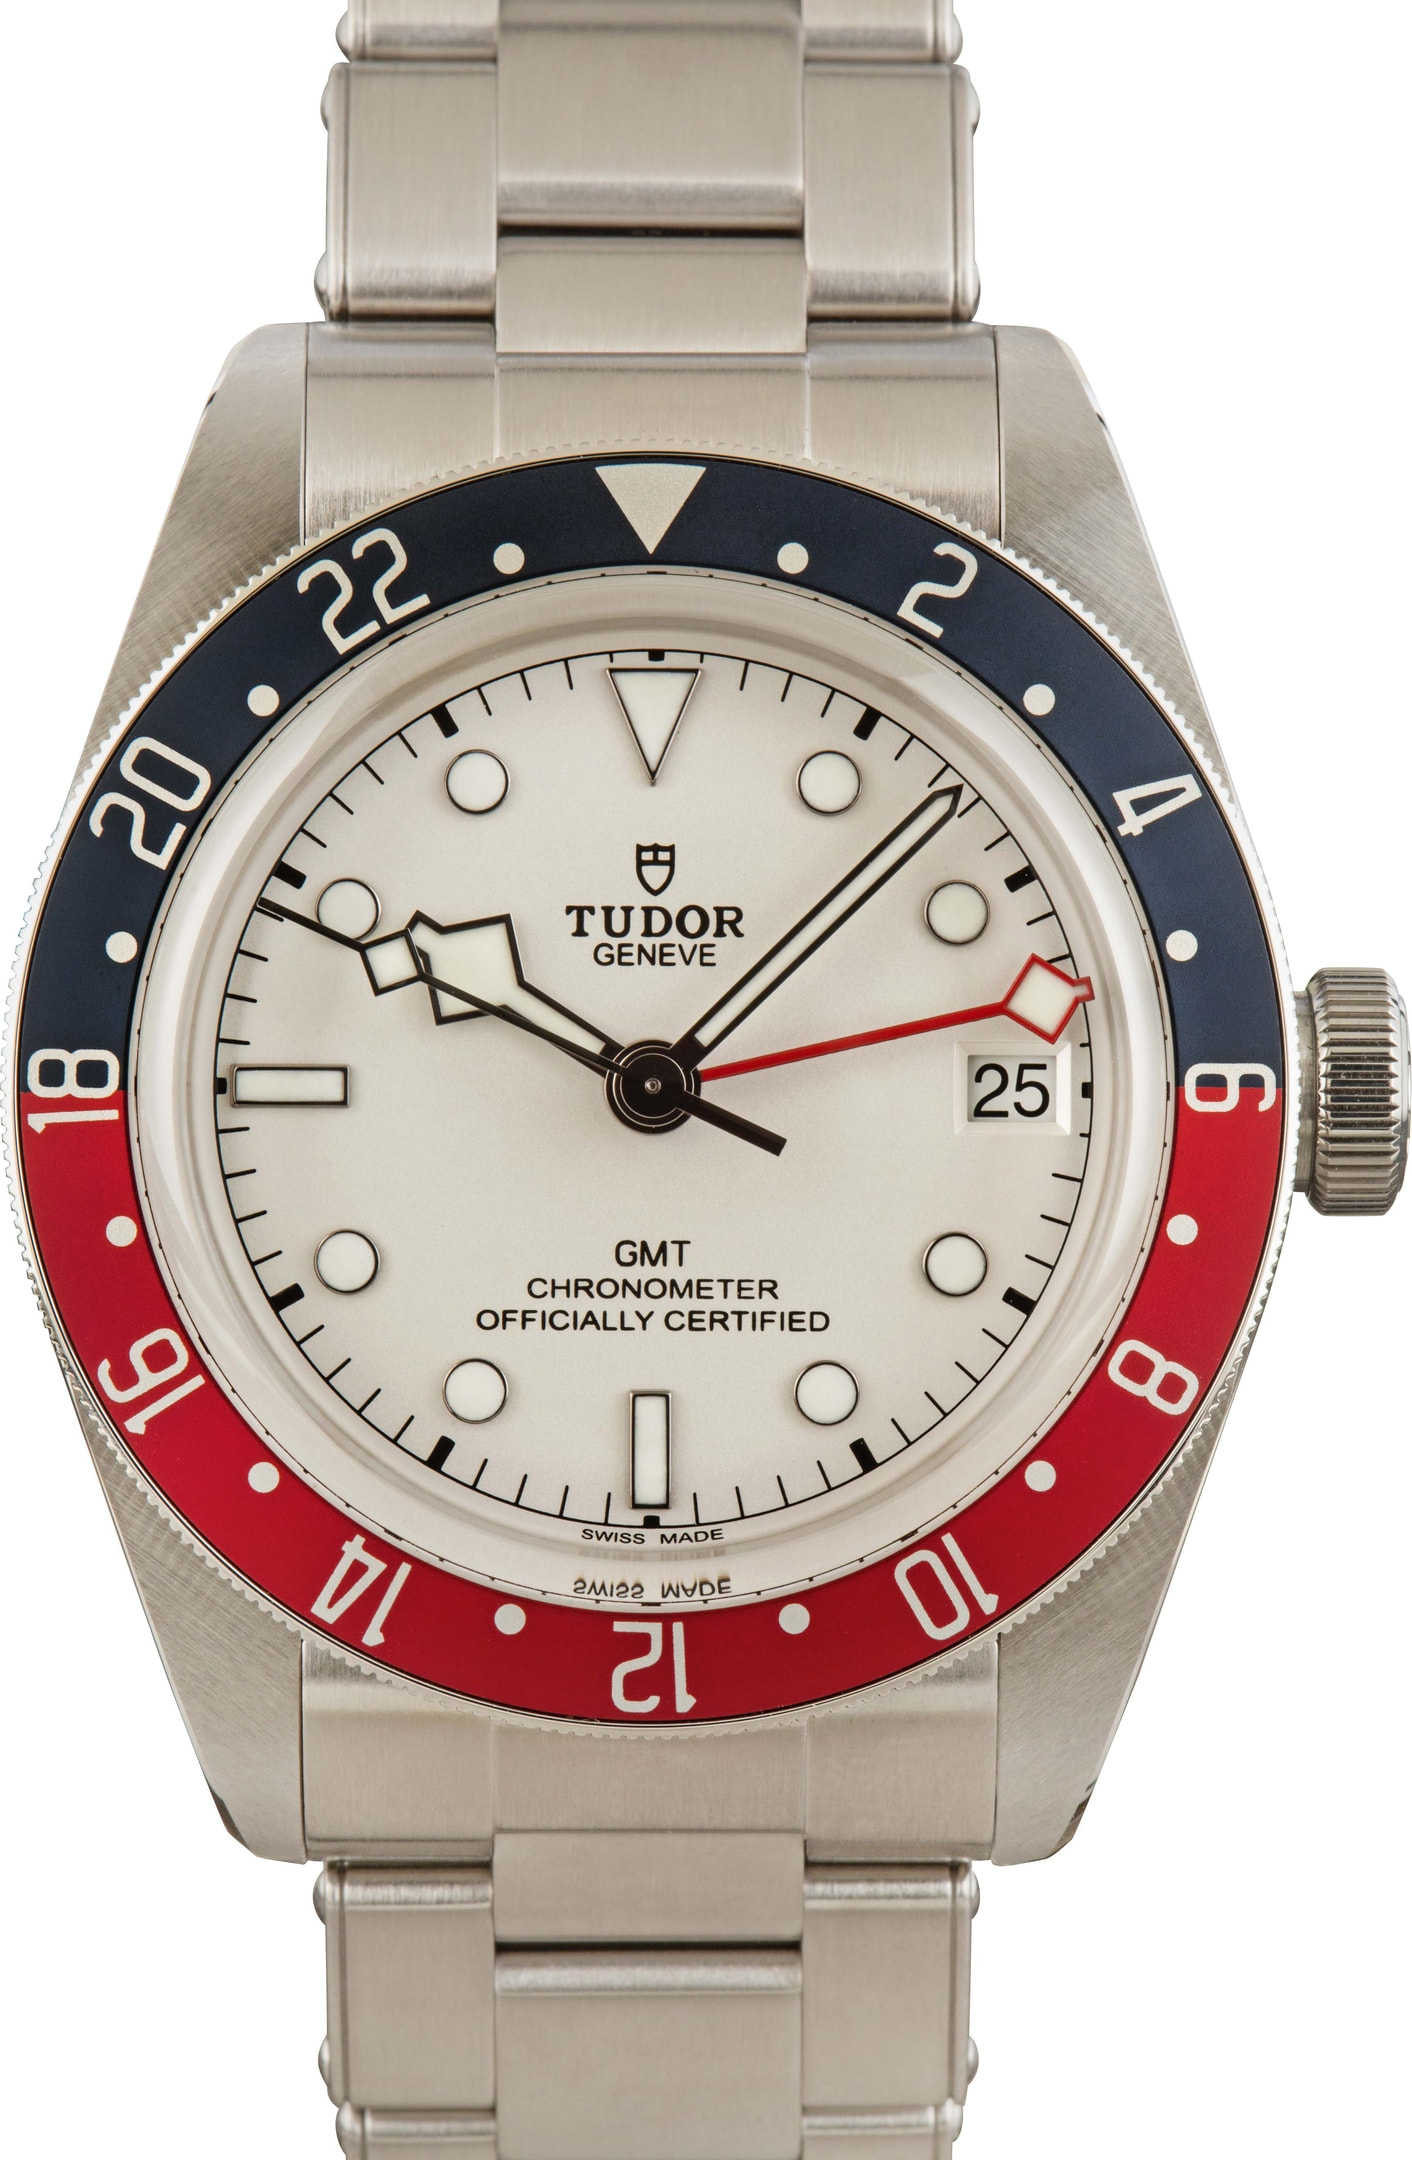 Buy Used Tudor Black Bay 79830 | Bob's Watches - Sku: 162410